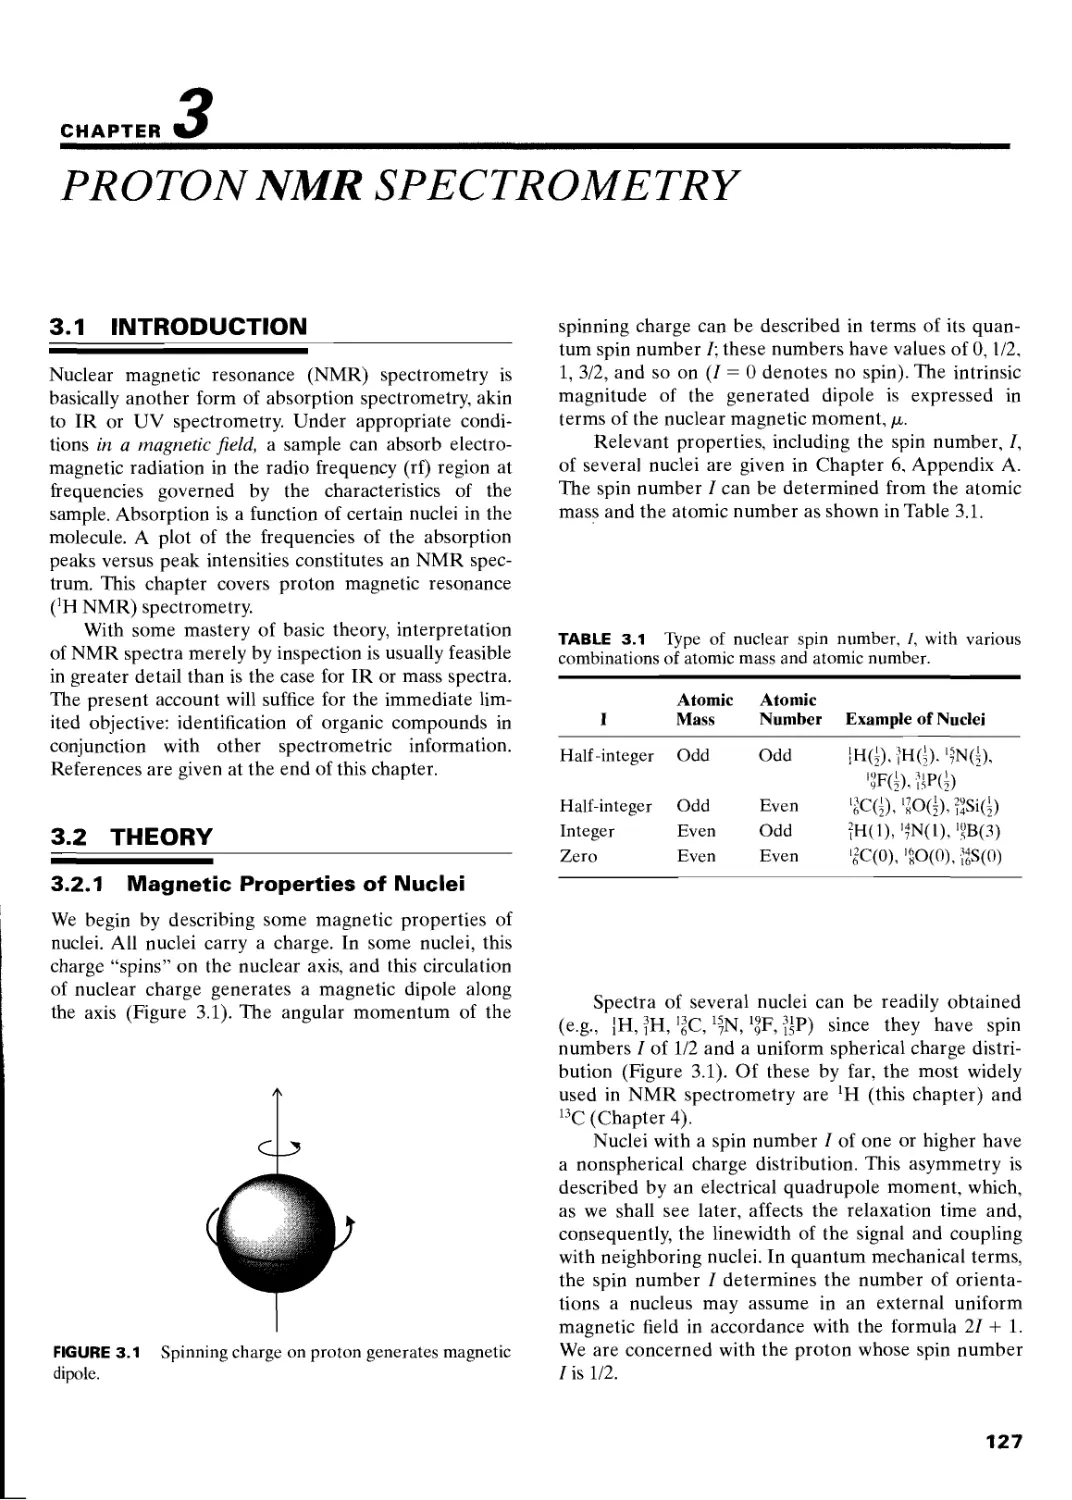 Chapter 3: Proton NMR Spectrometry